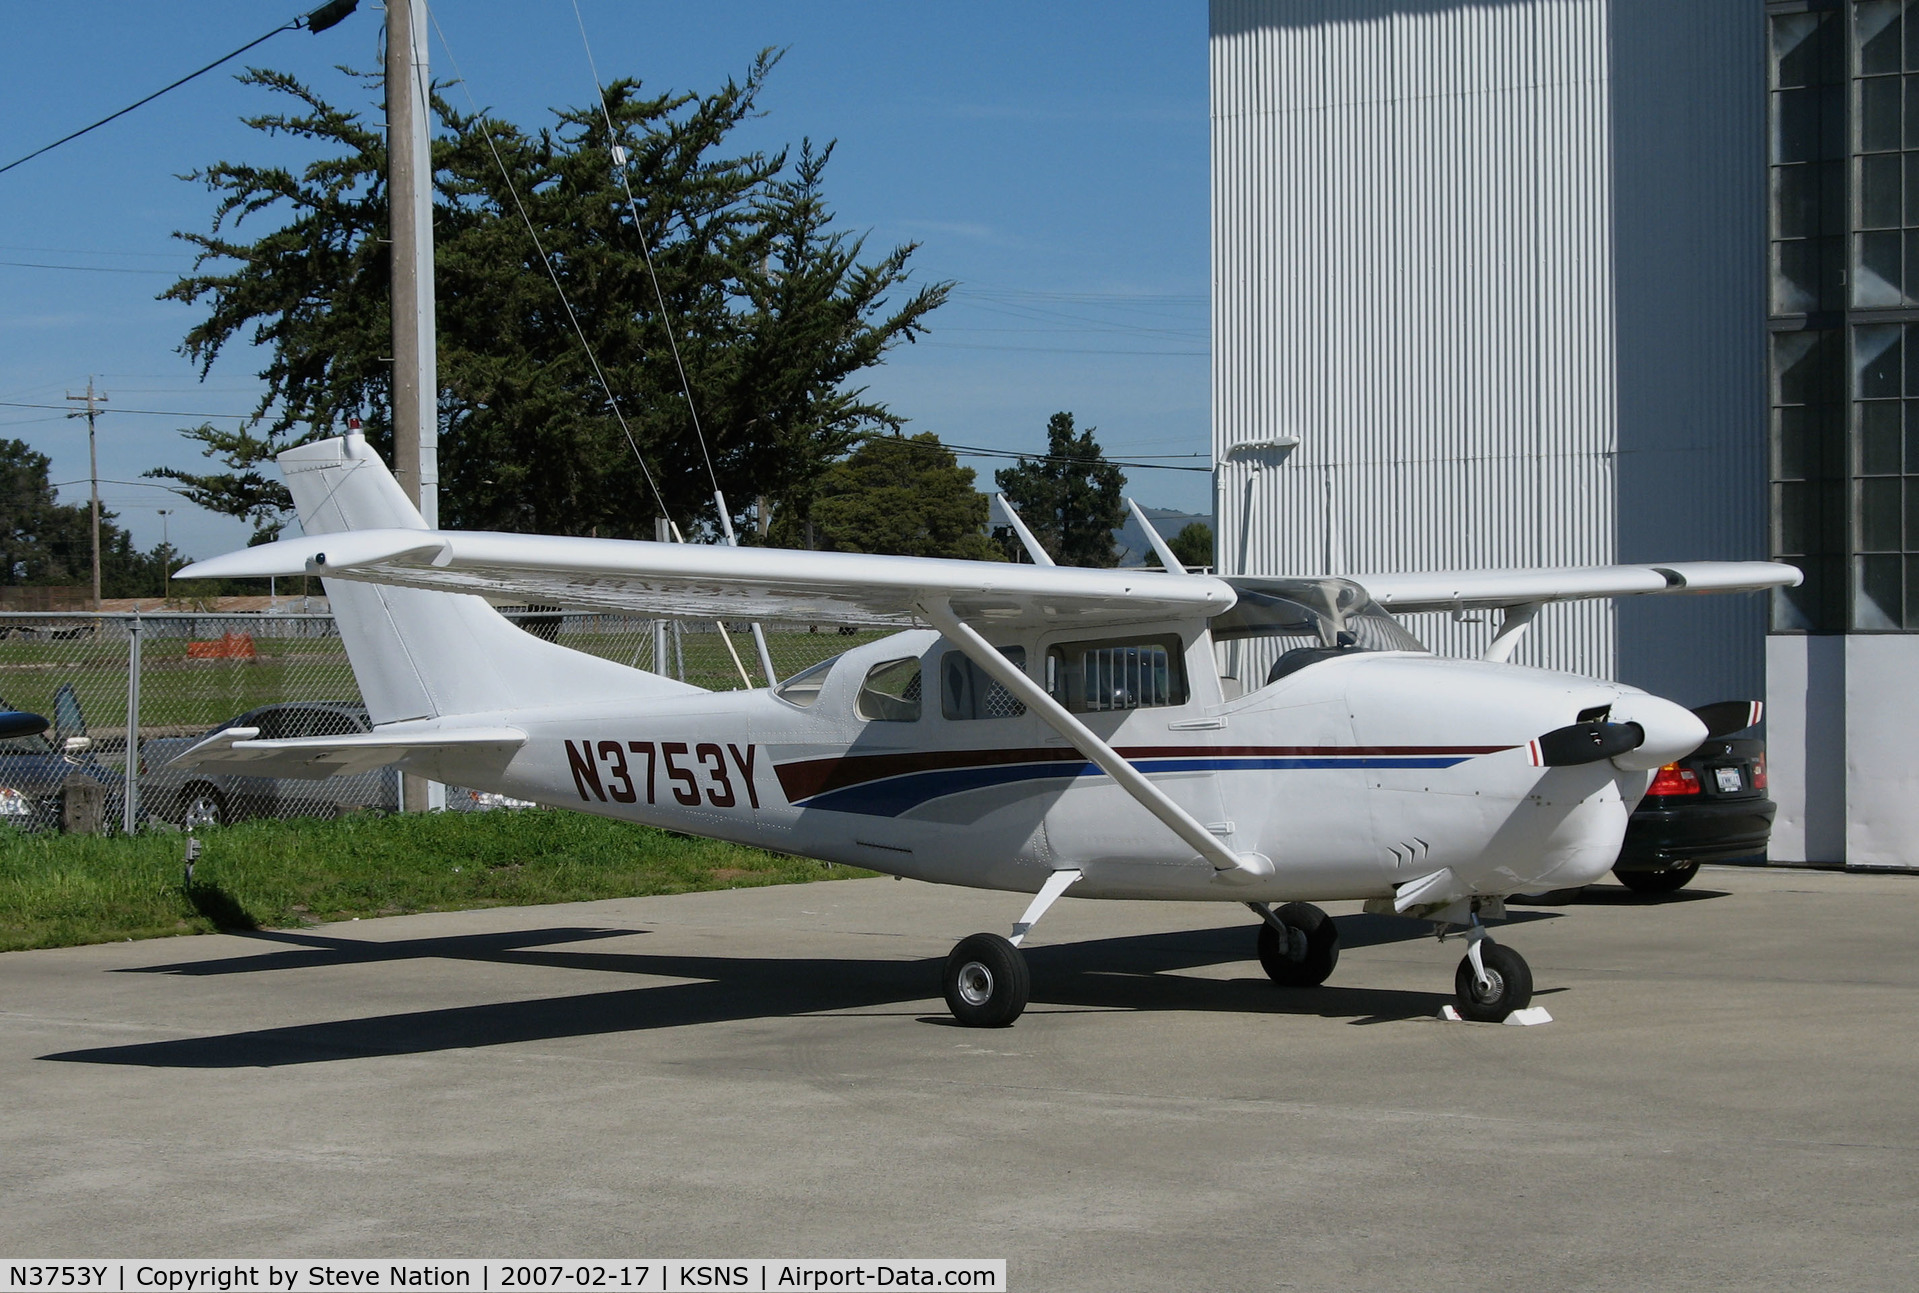 N3753Y, 1963 Cessna 210D Centurion C/N 21058253, Buchanan Field (Concord, CA-based) 1963 Cessna 210D @ Salinas Municipal Airport, CA